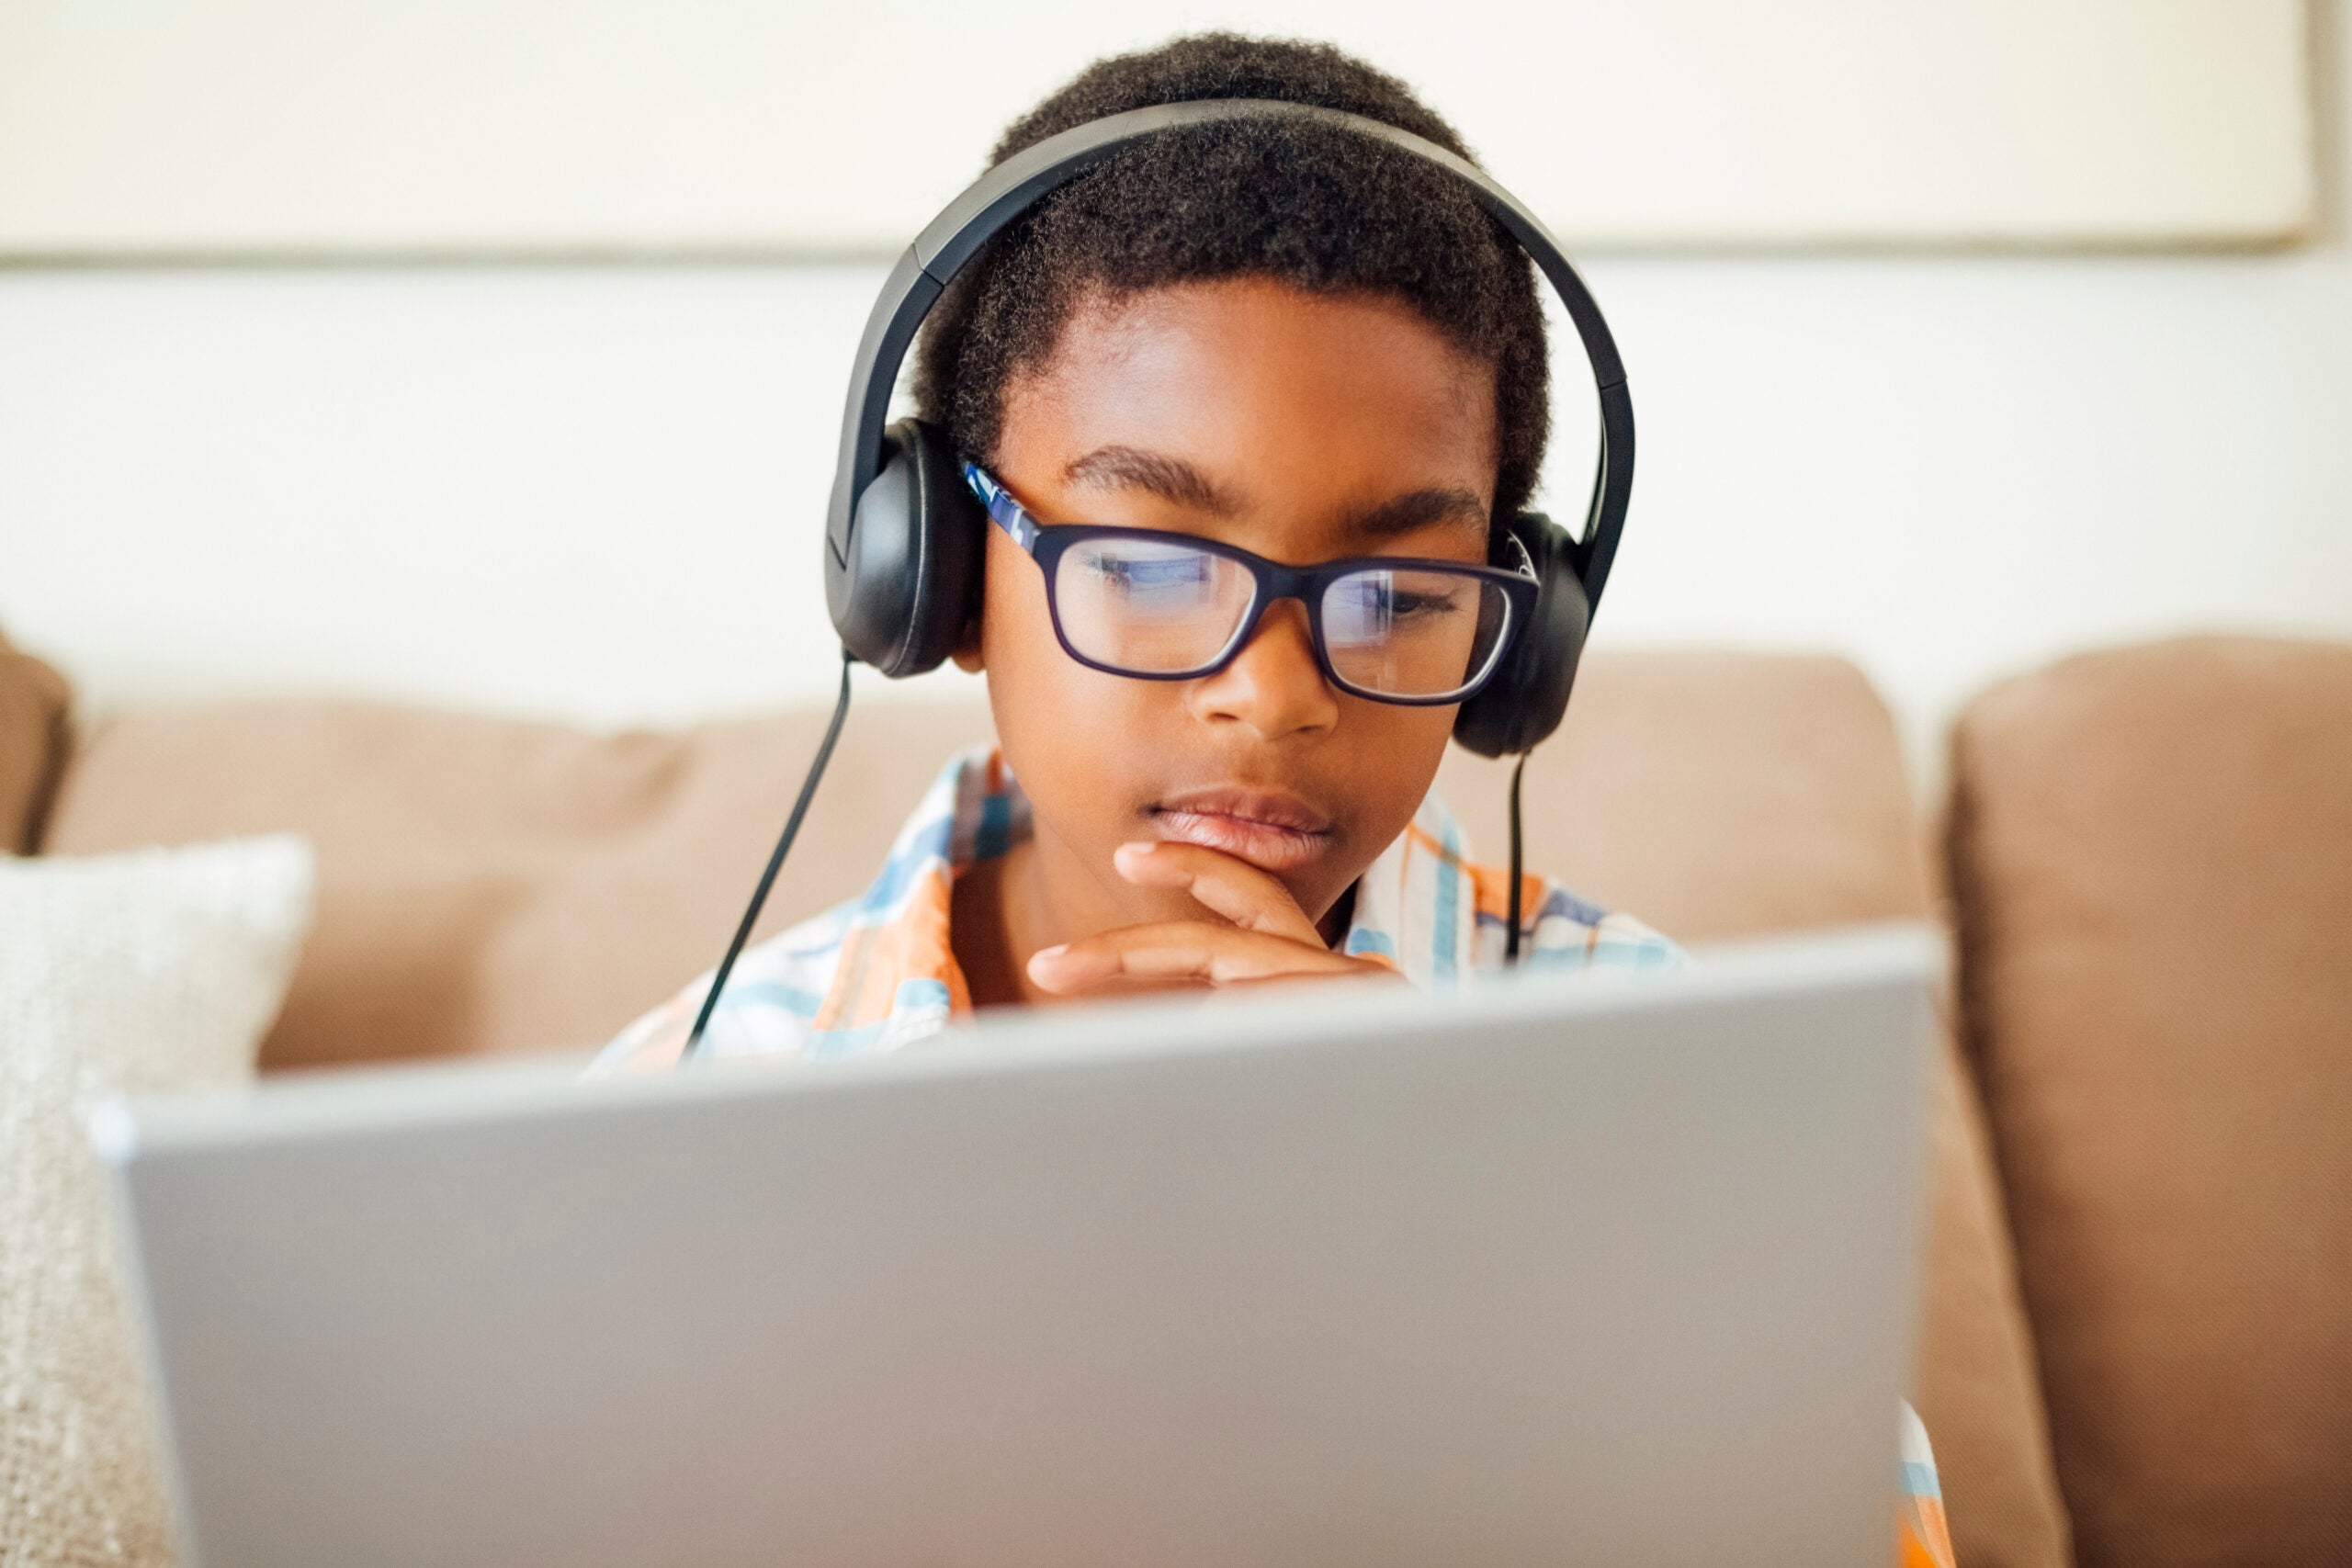 Boy with headphones using laptop in living room